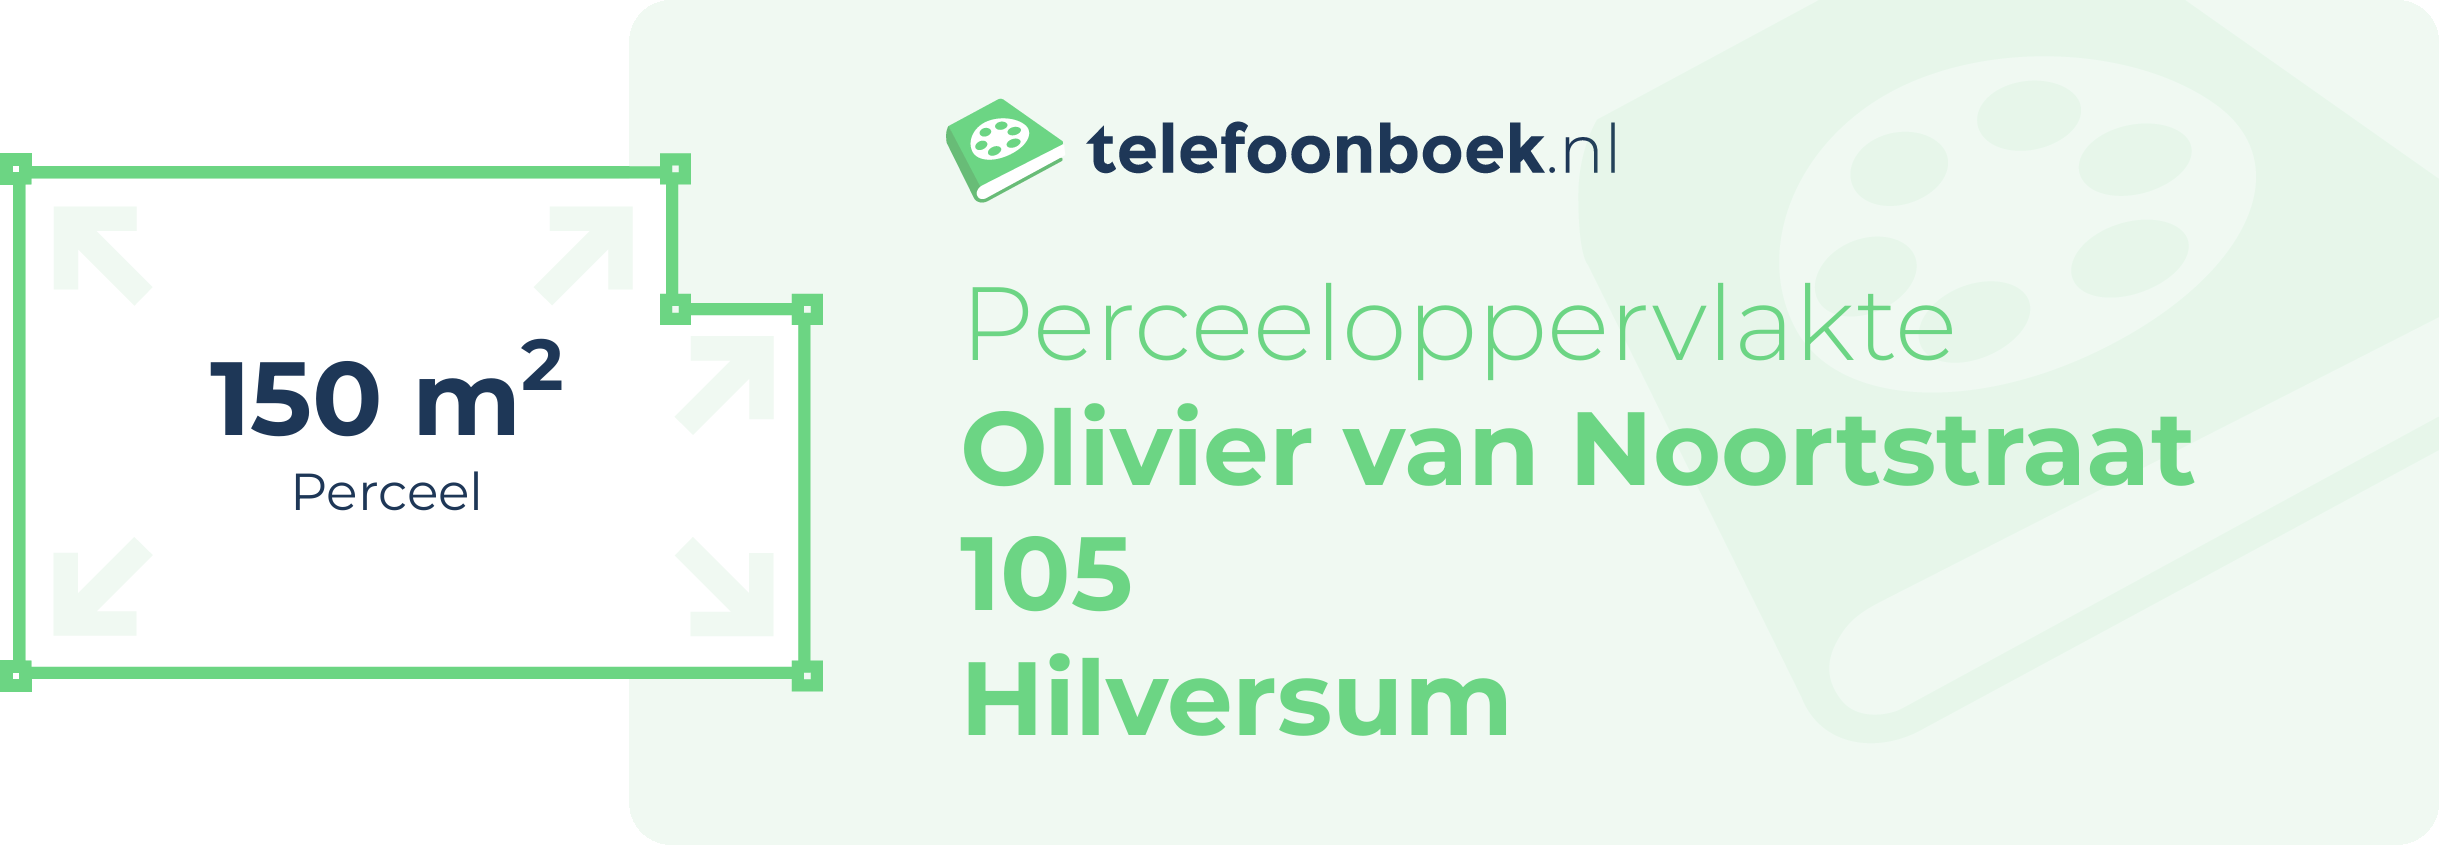 Perceeloppervlakte Olivier Van Noortstraat 105 Hilversum